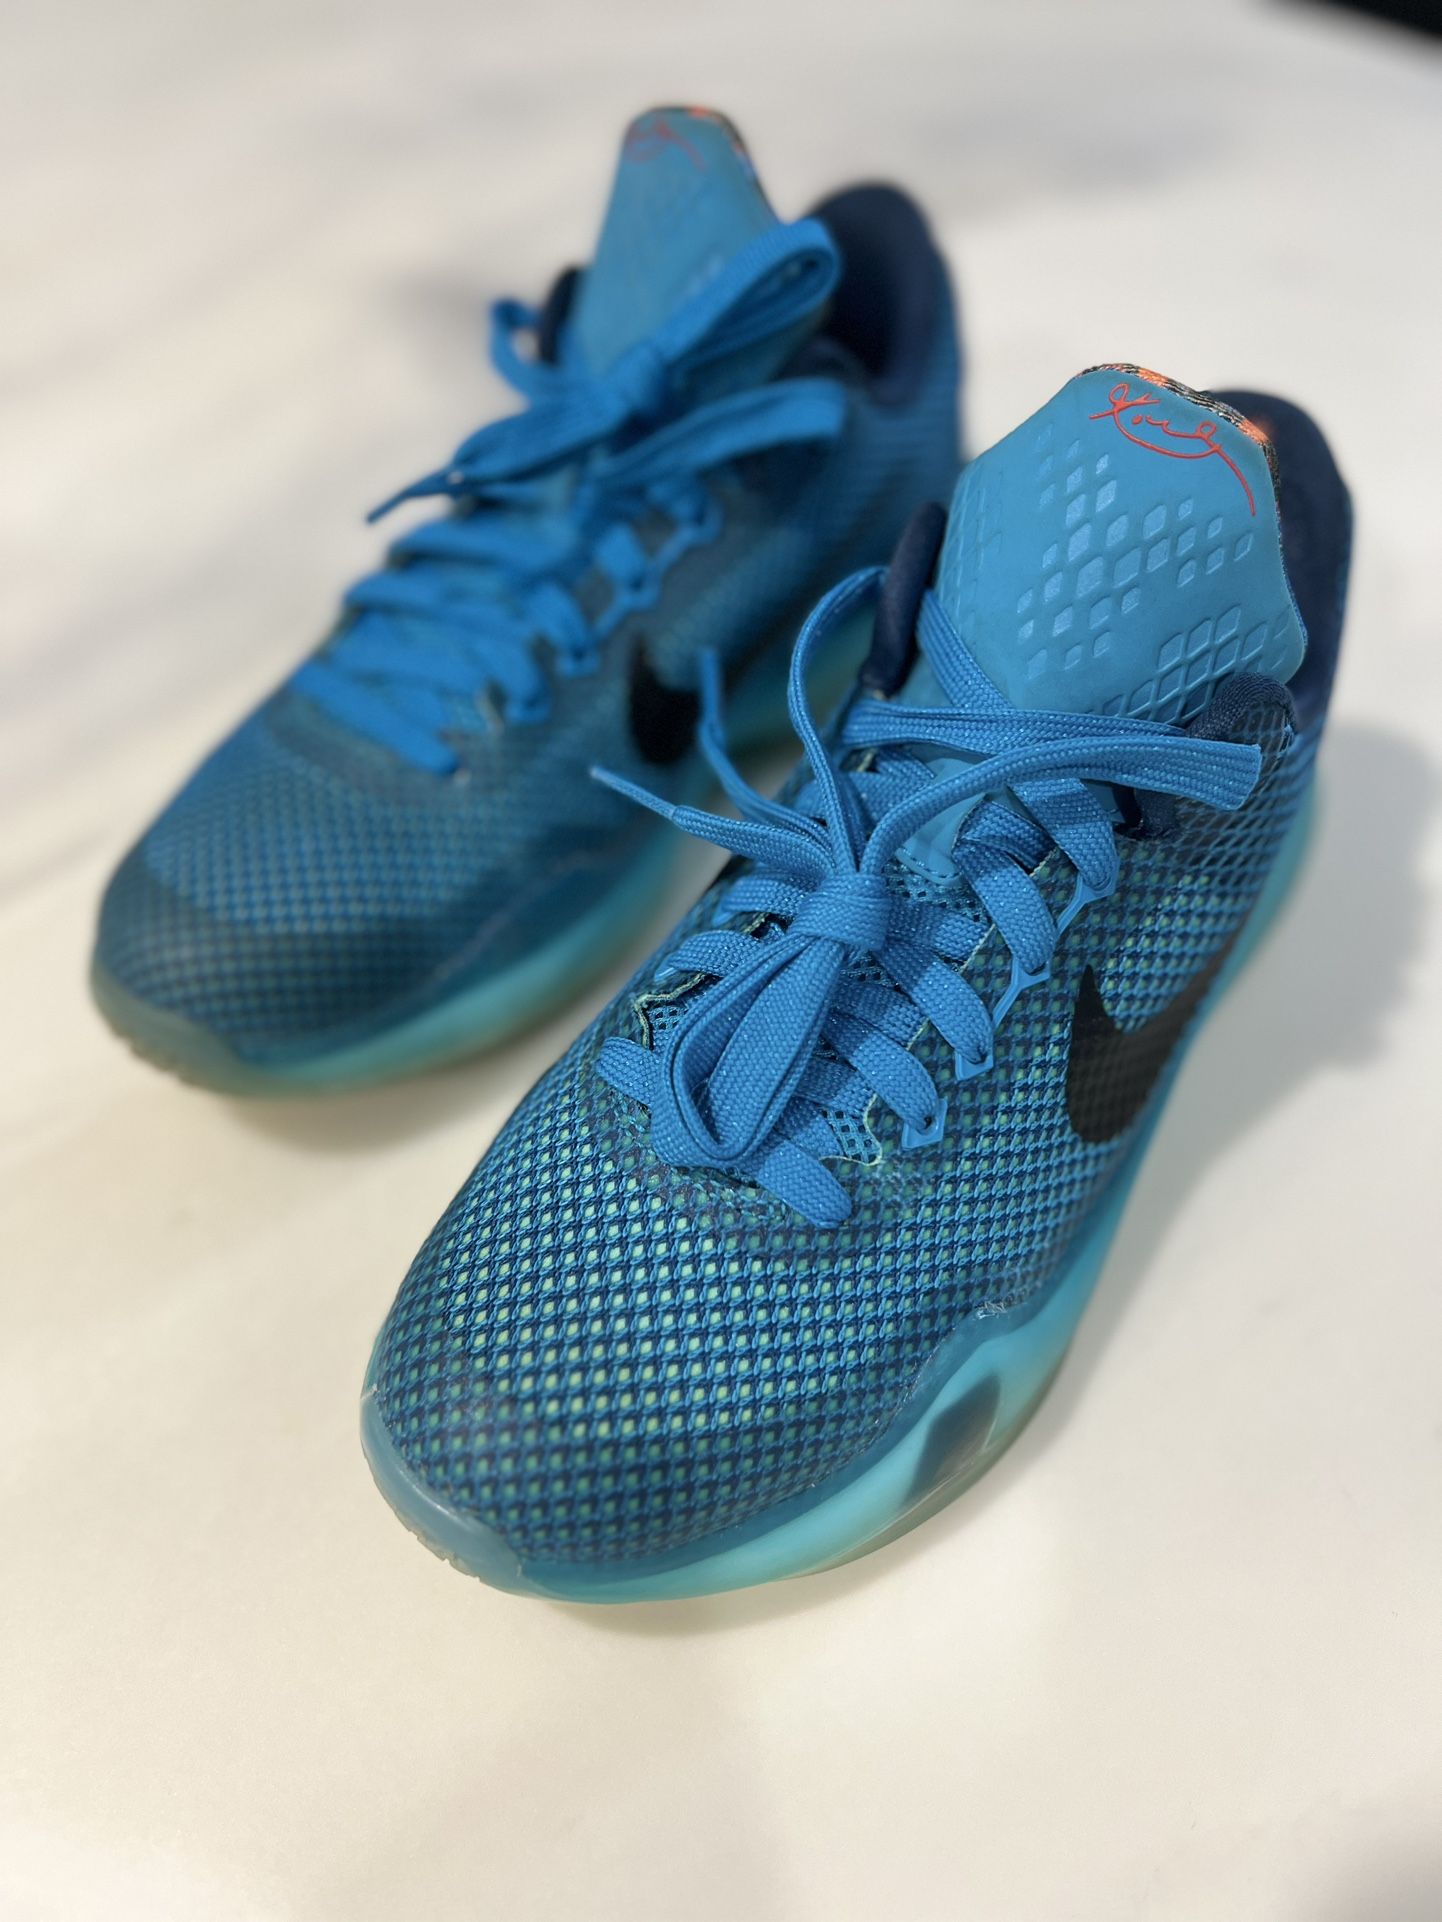 Nike Kobe X “5am Flight” 